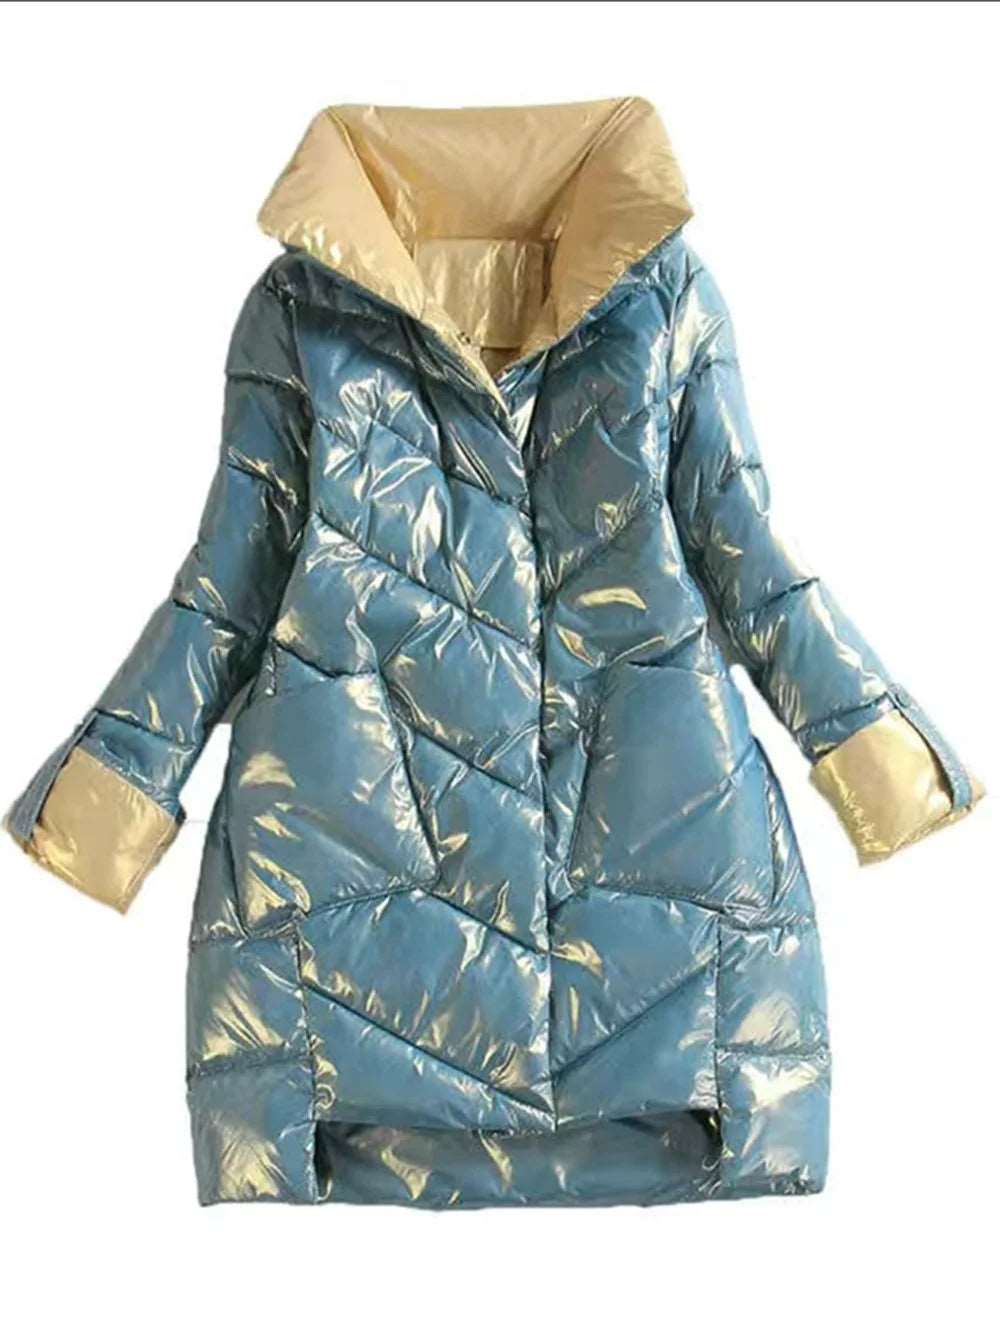 Parka Winter Coat | Parka Type Winter Coat | WARDROBE ESSENTIALS 3.0